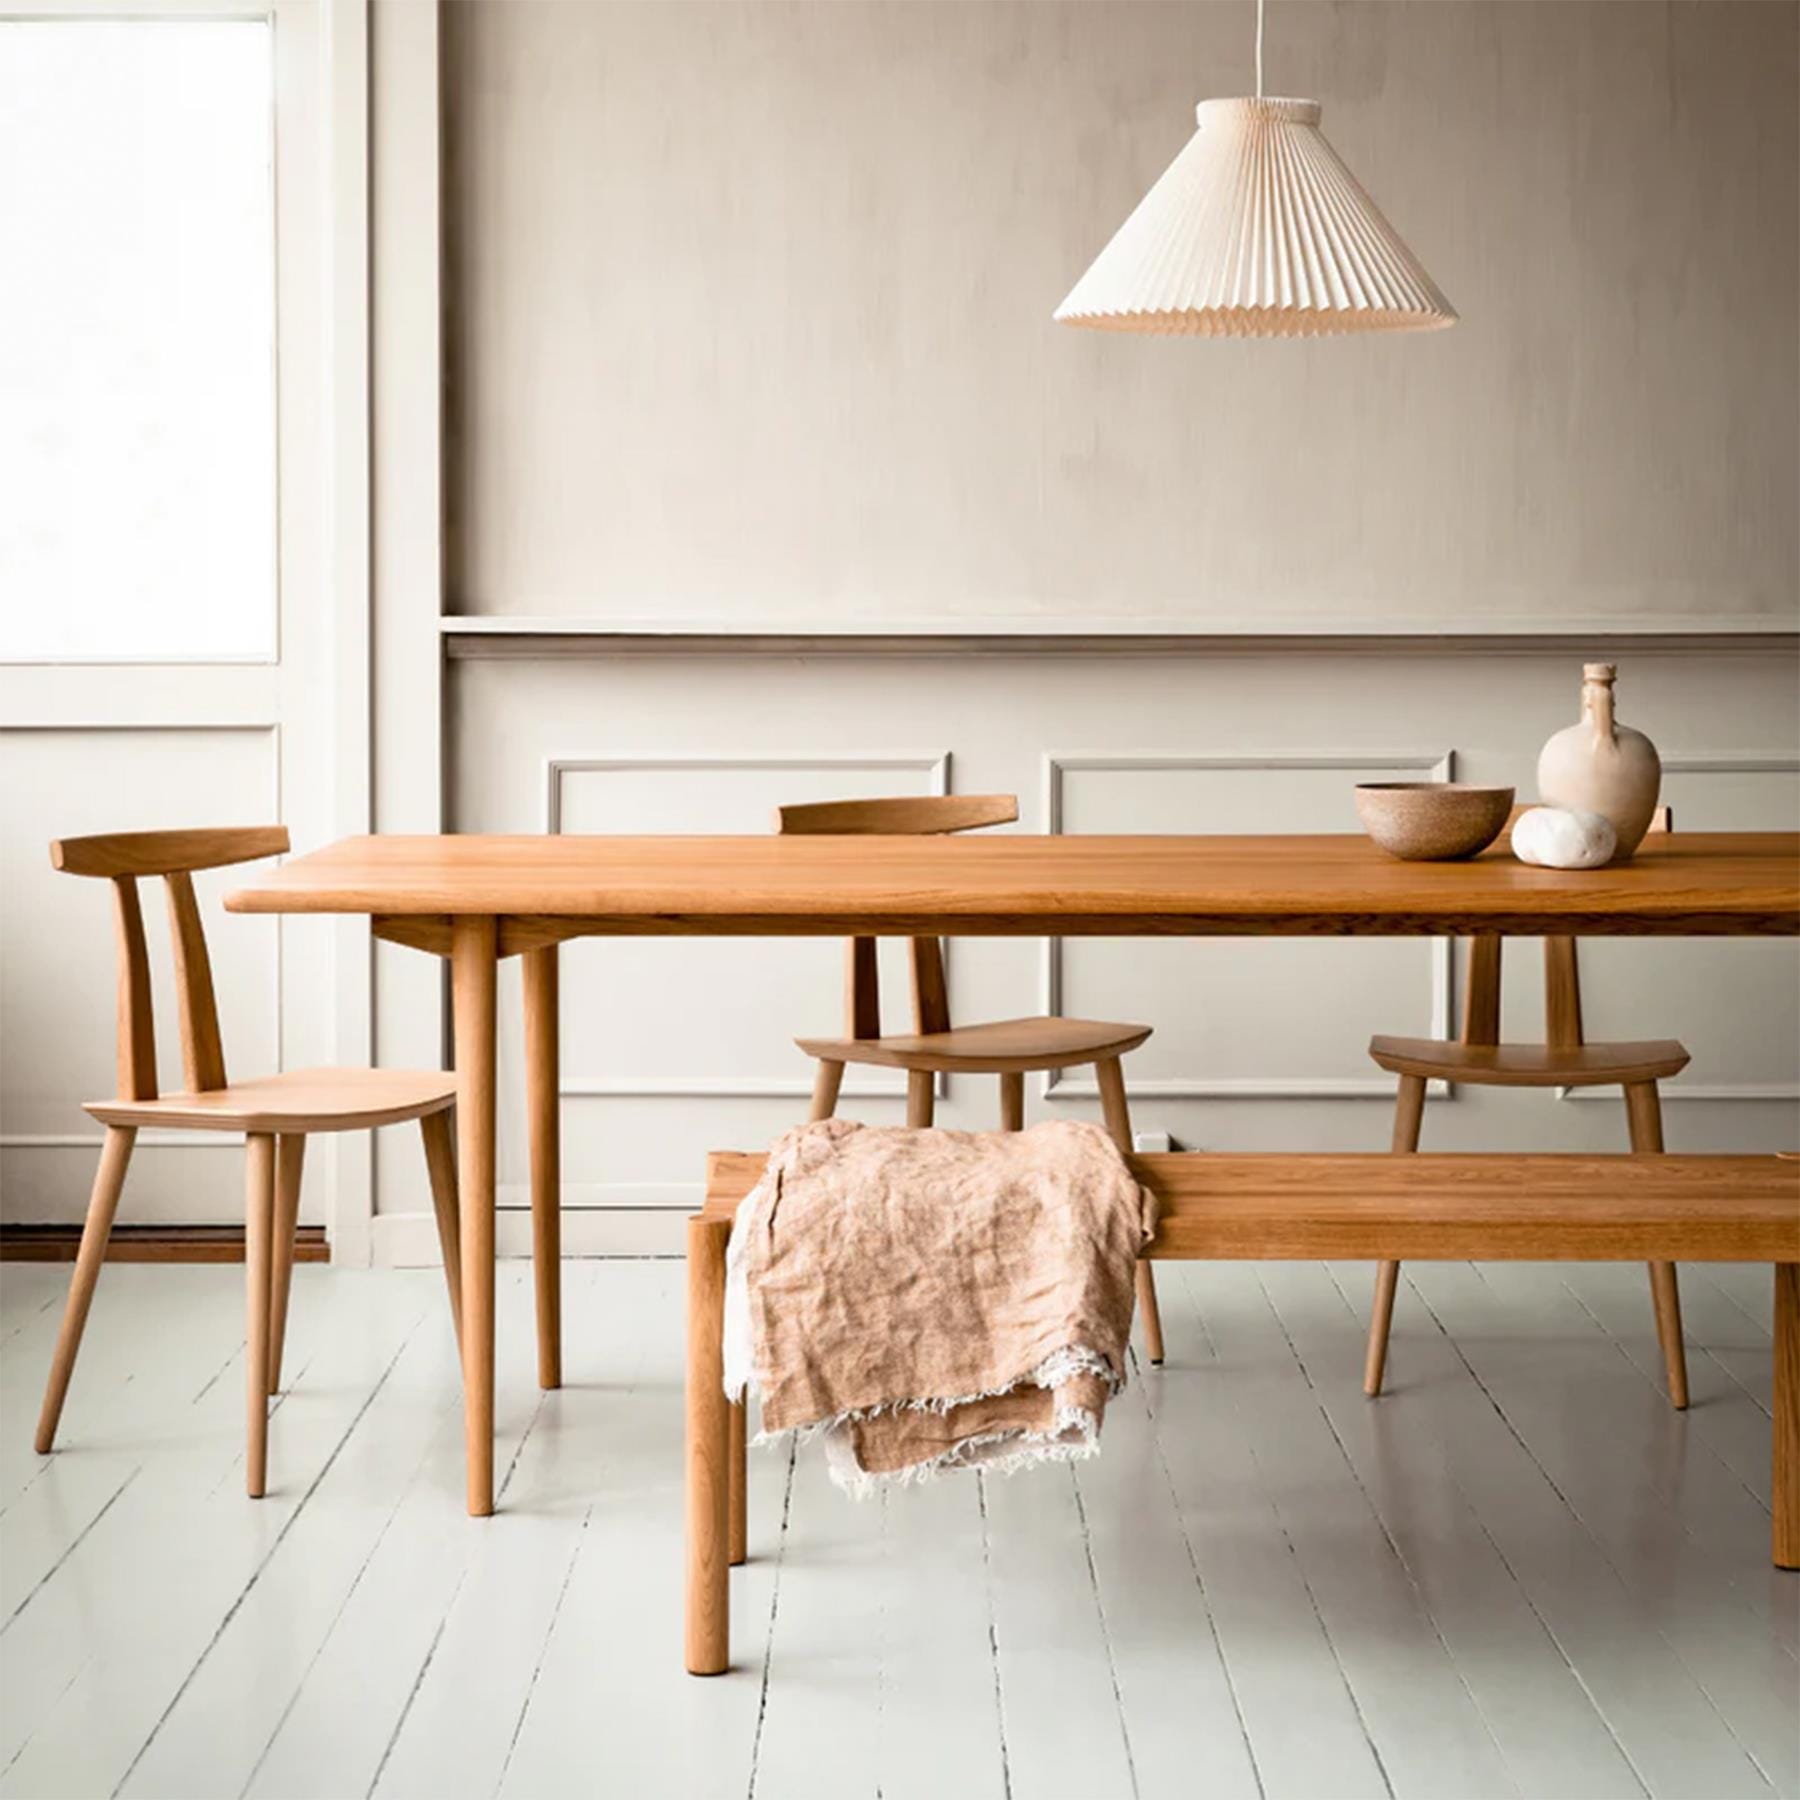 Make Nordic Holmen Rectangular Dining Table Large Natural Oak Length 300cm Width 80cm Without Extra Leaves Light Wood Designer Furniture From